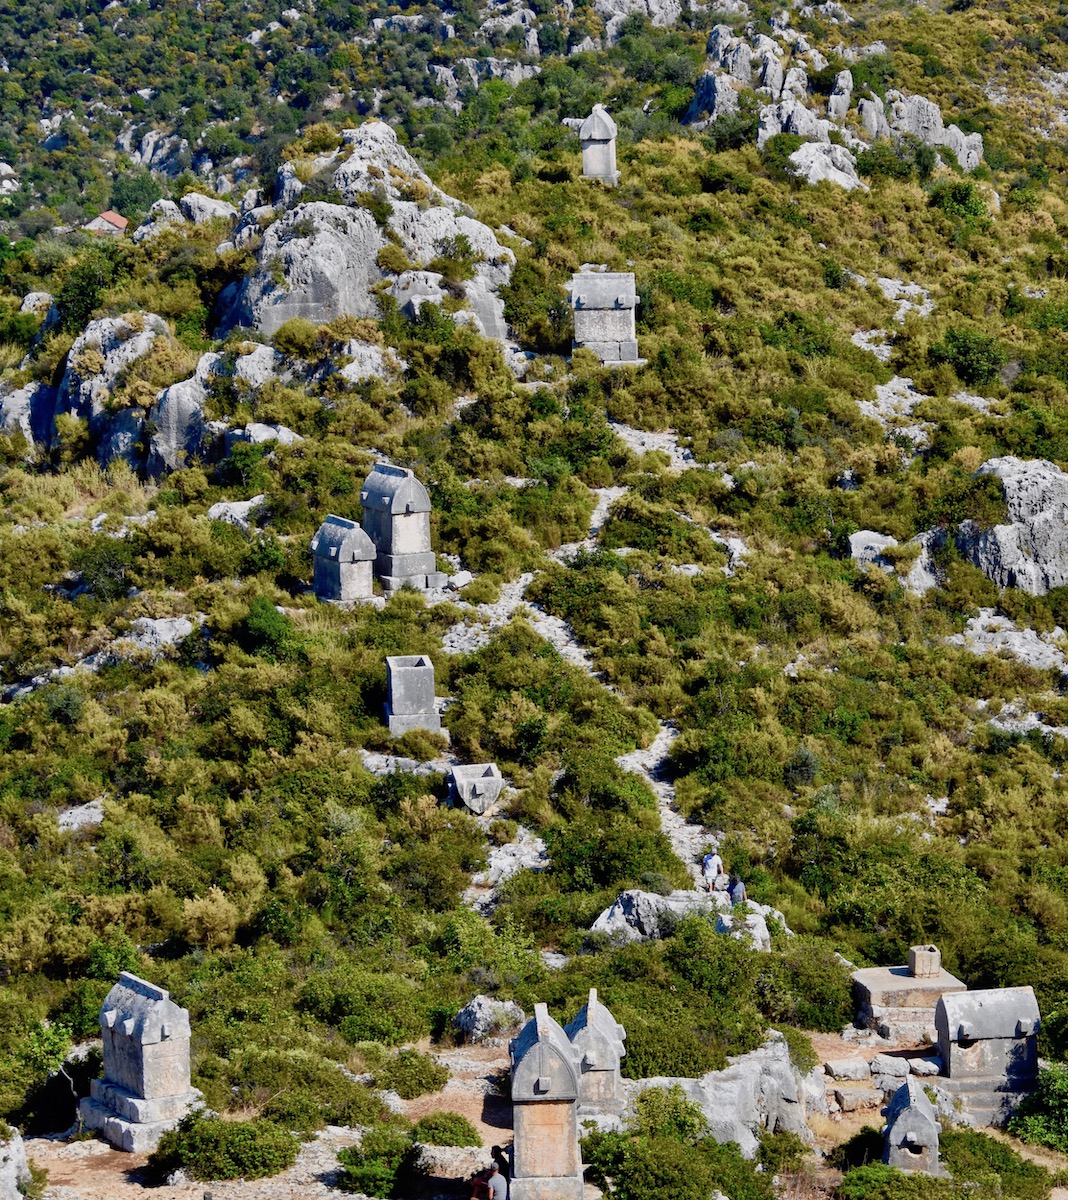 Lycian Tombs near the Citadel of Simena, the Turquoise Coast